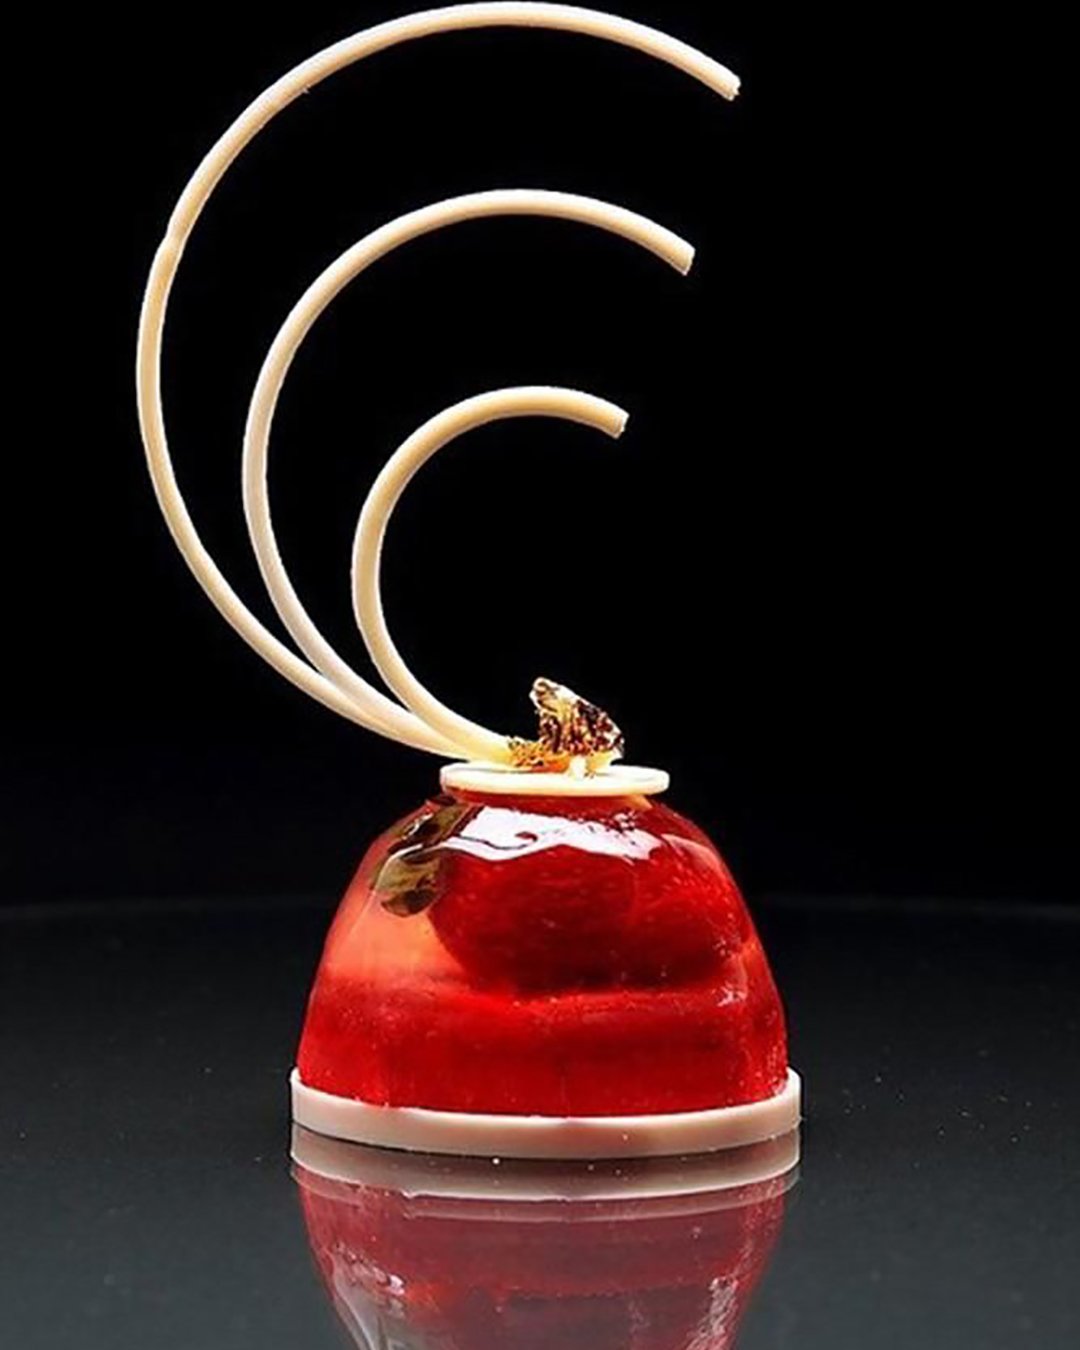 wedding cake alternatives red glossy jelly cake dinarakasko via instagram